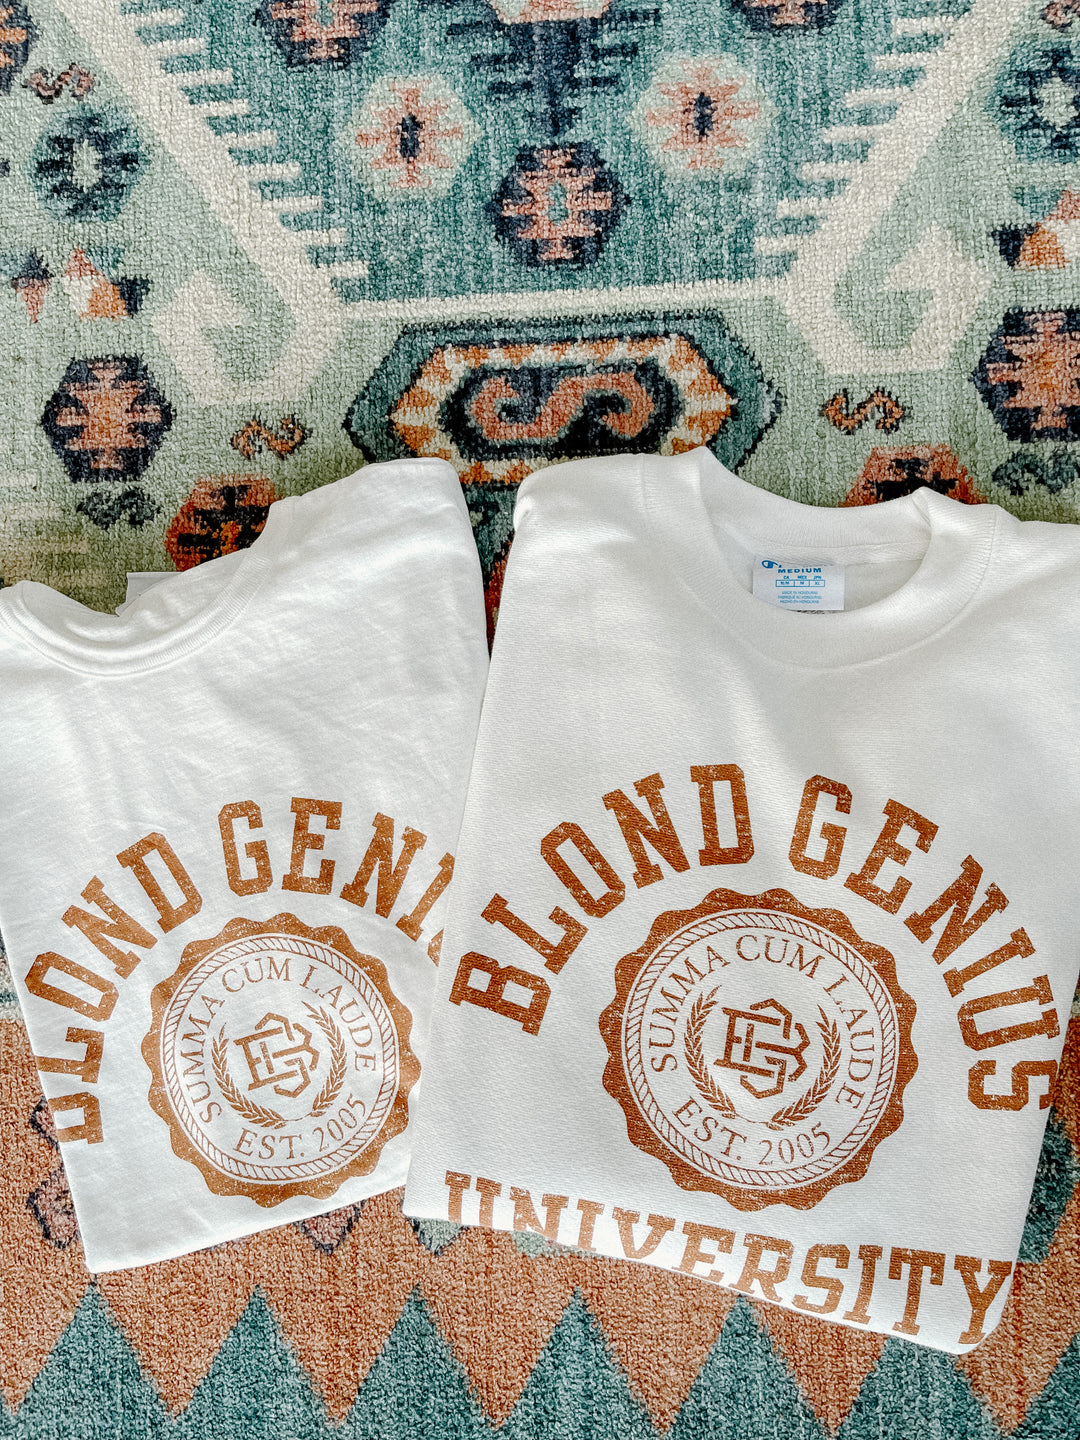 Blond Genius - Blond Genius University in White with Brown